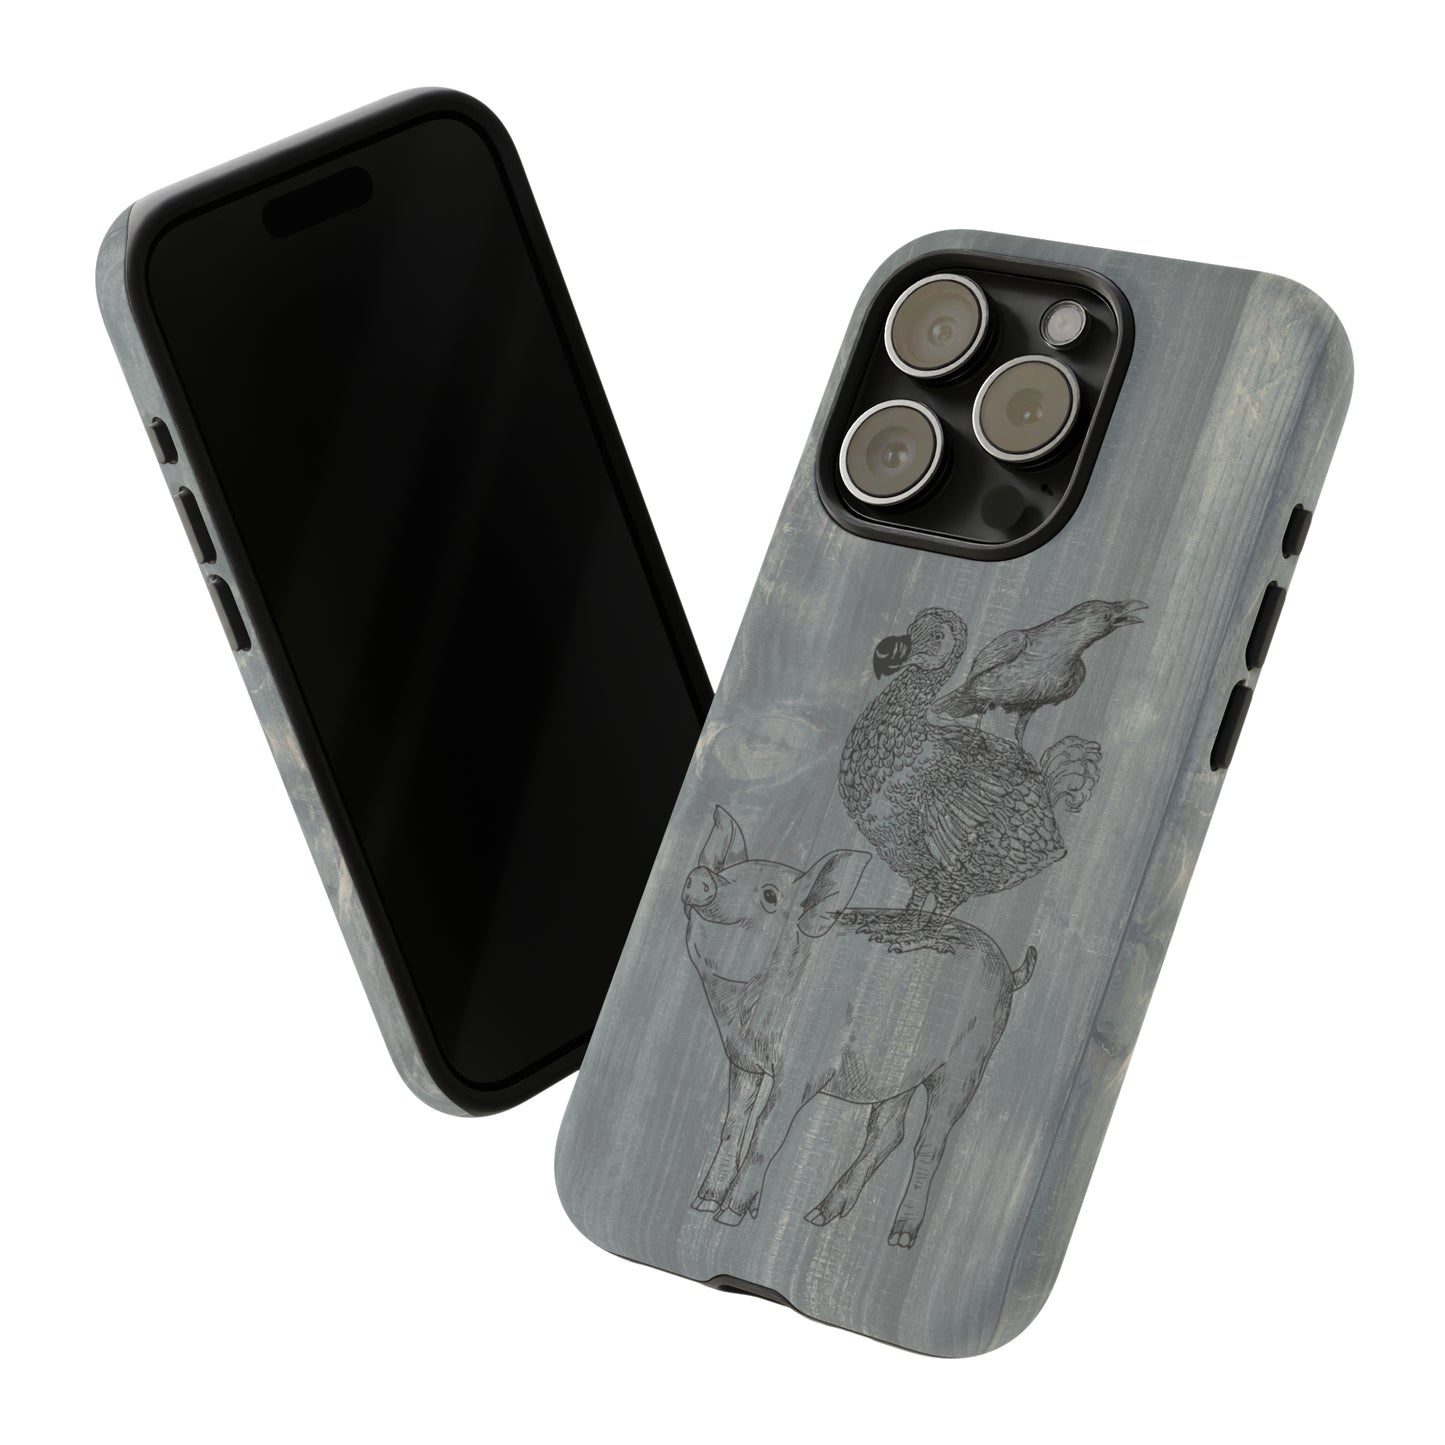 Tough Case - iPhone - Samsung - dmb - design5 - pig/dodo/raven - on blue wood